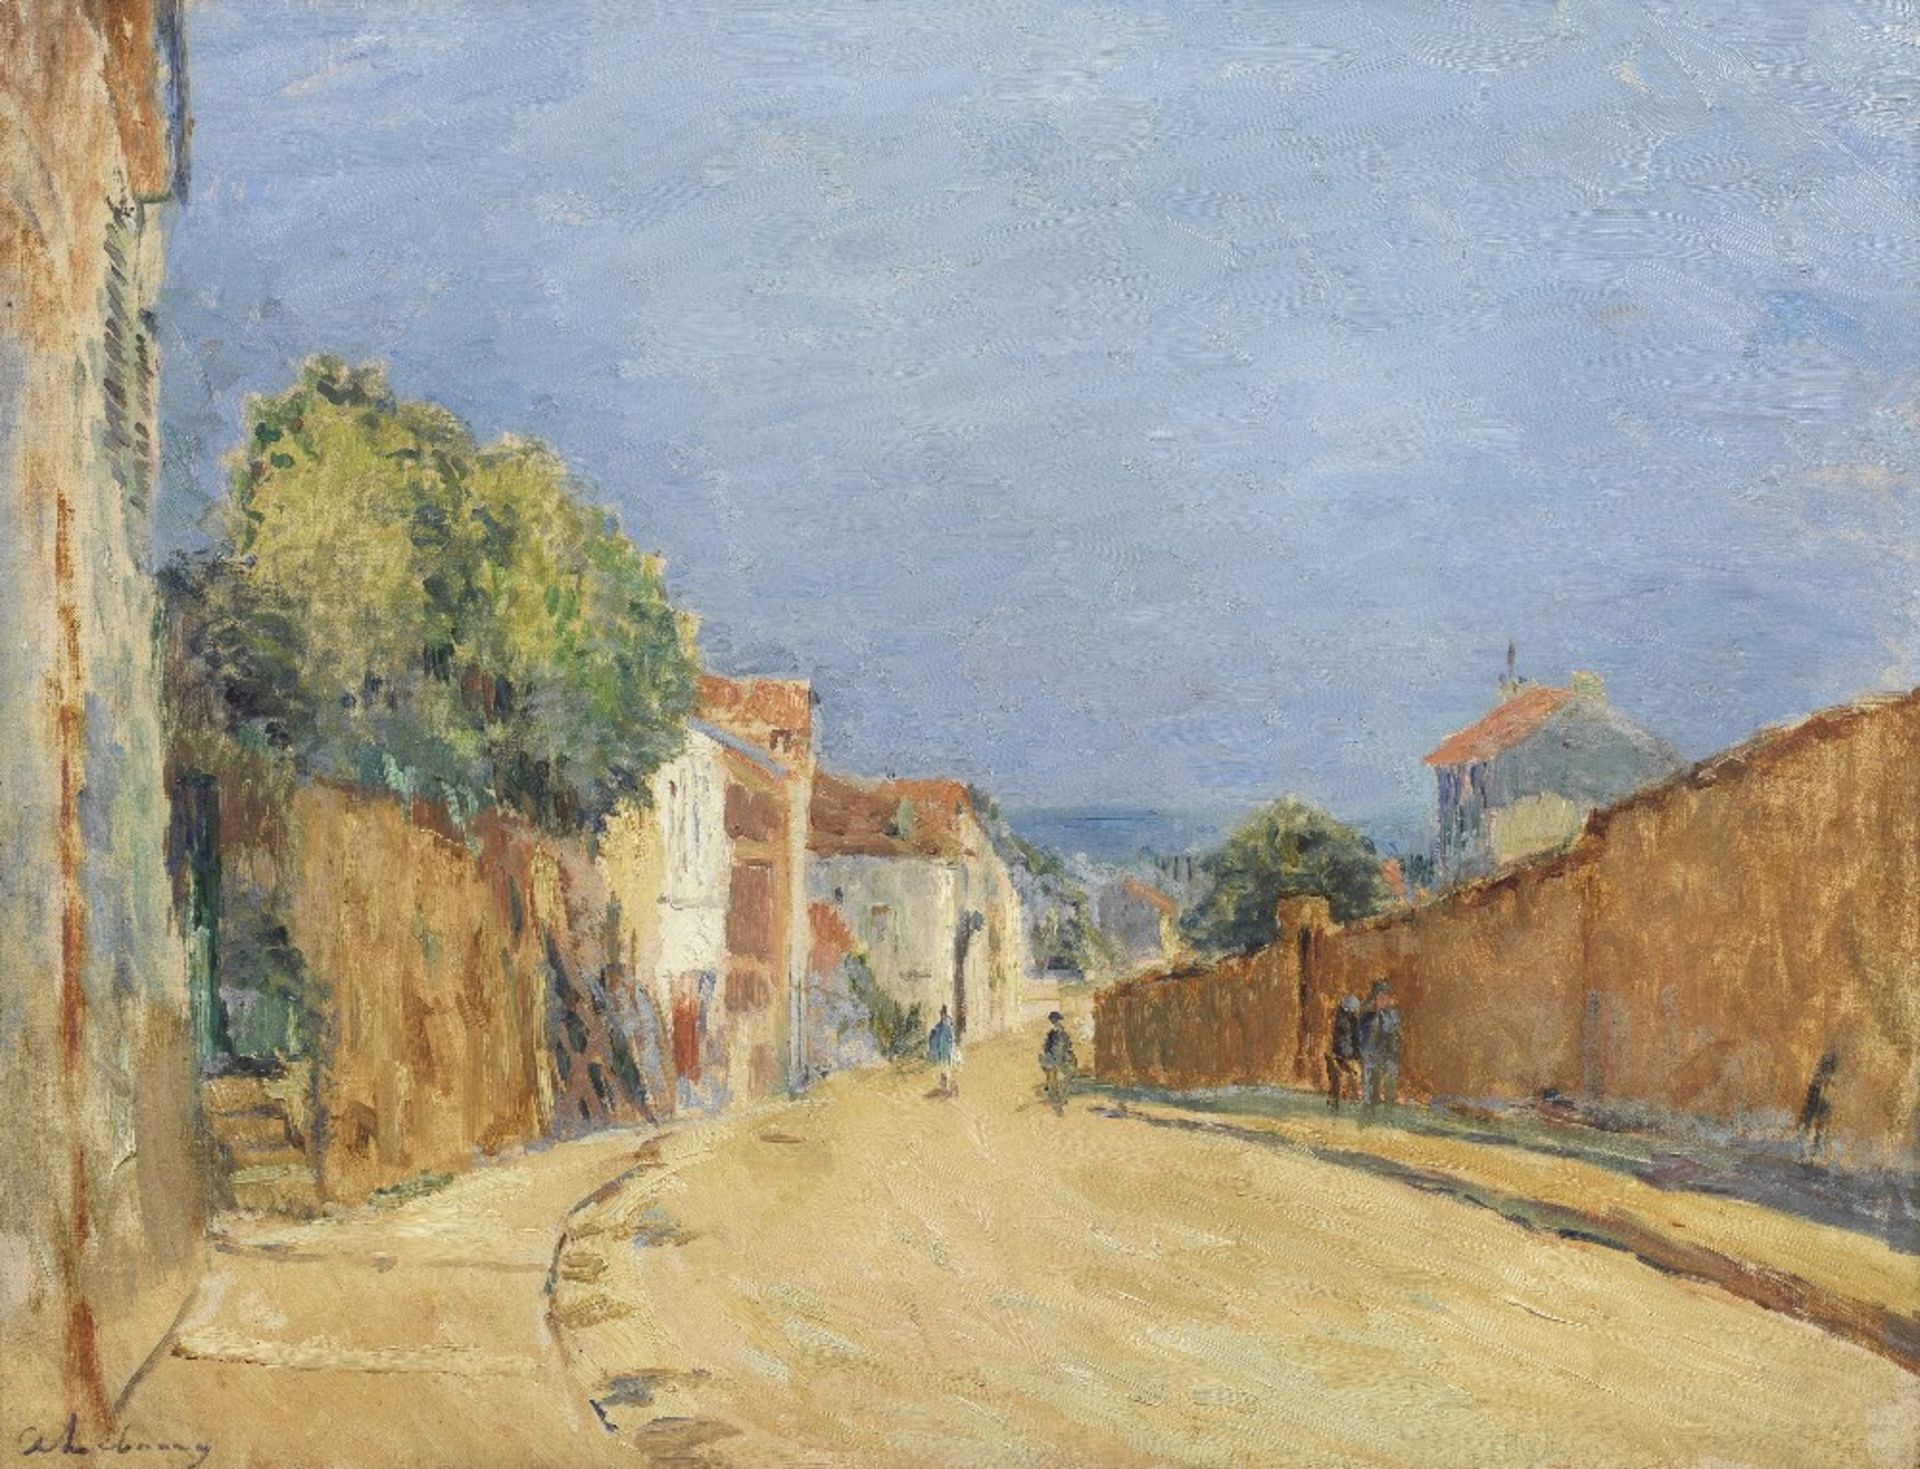 ALBERT LEBOURG (1849-1928) Une rue de village (&#224; midi) (Painted circa 1900-1905)